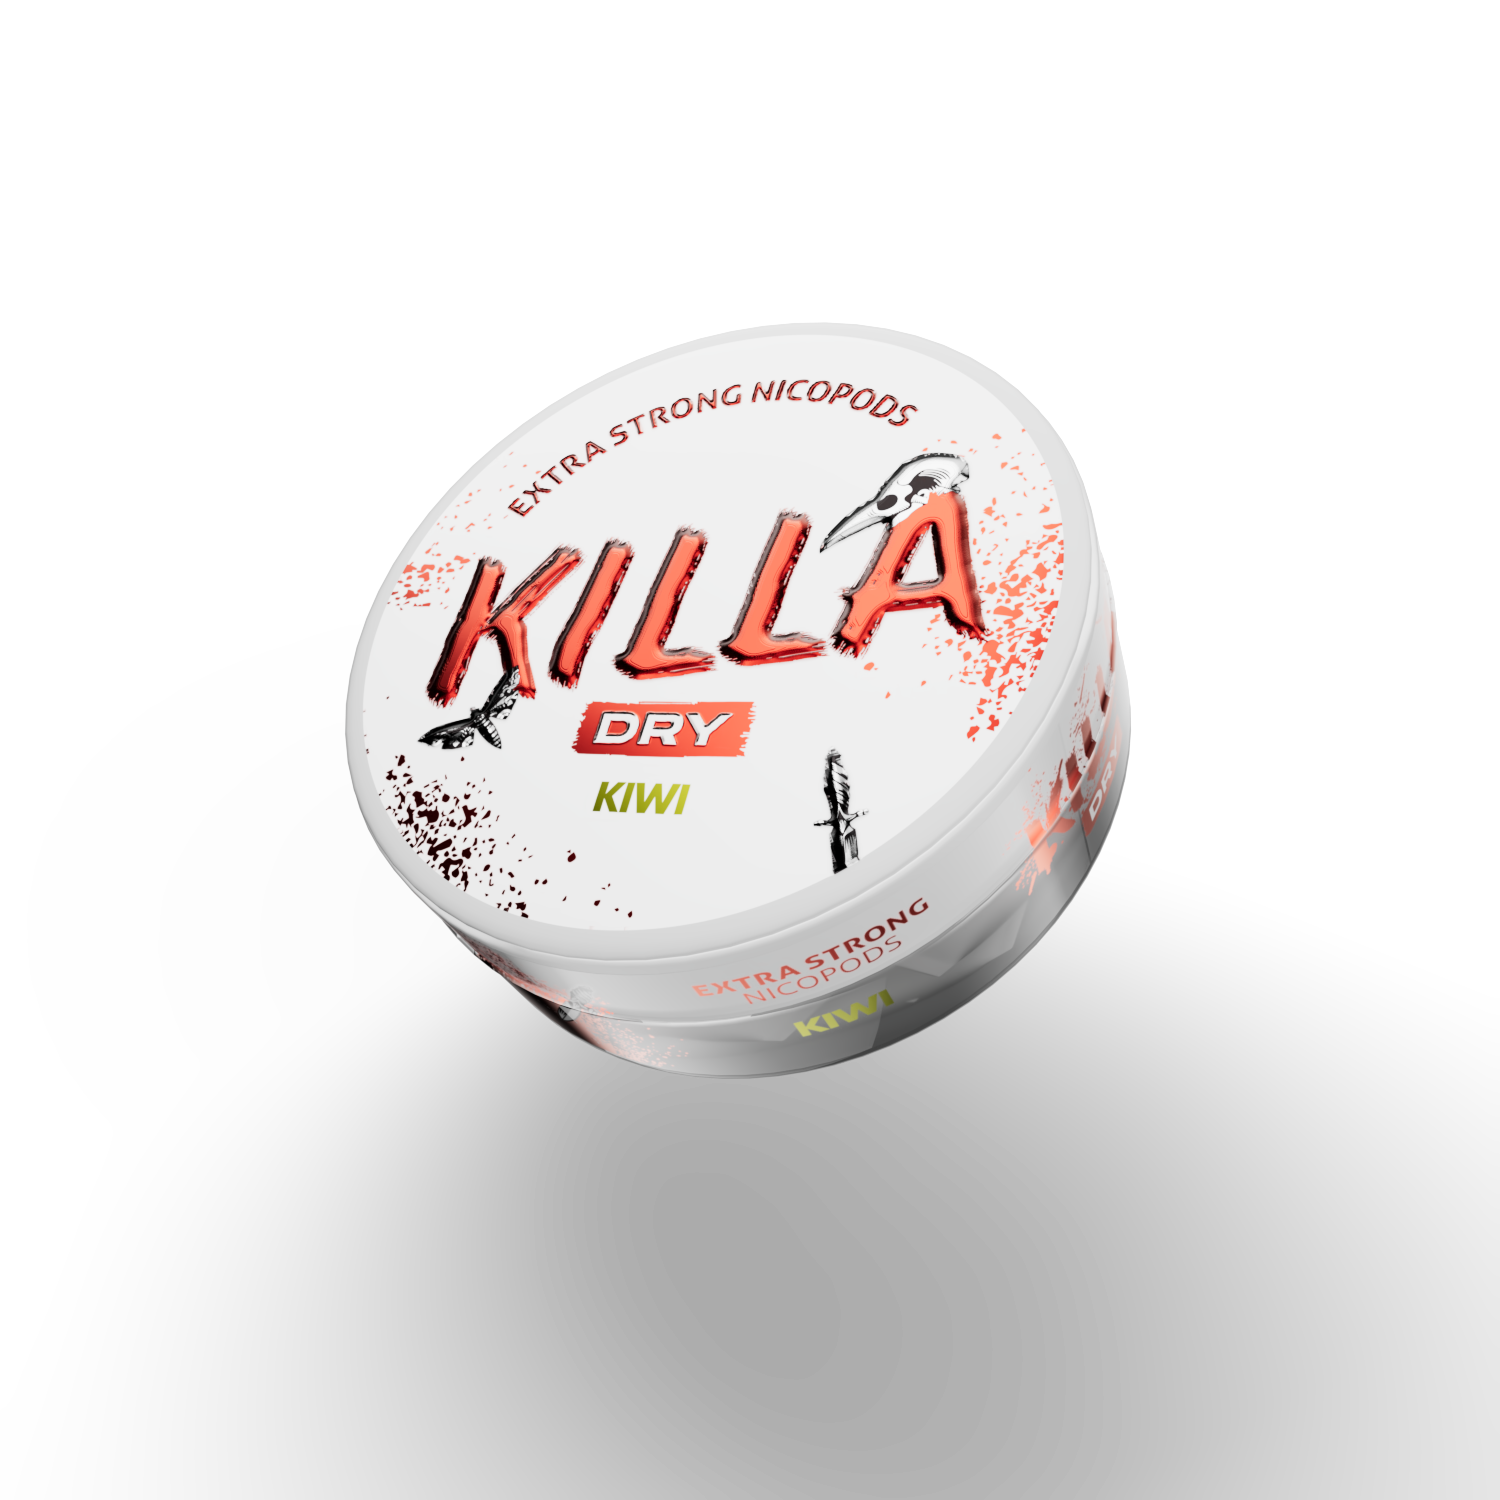 Killa_Dry_Kiwi_1